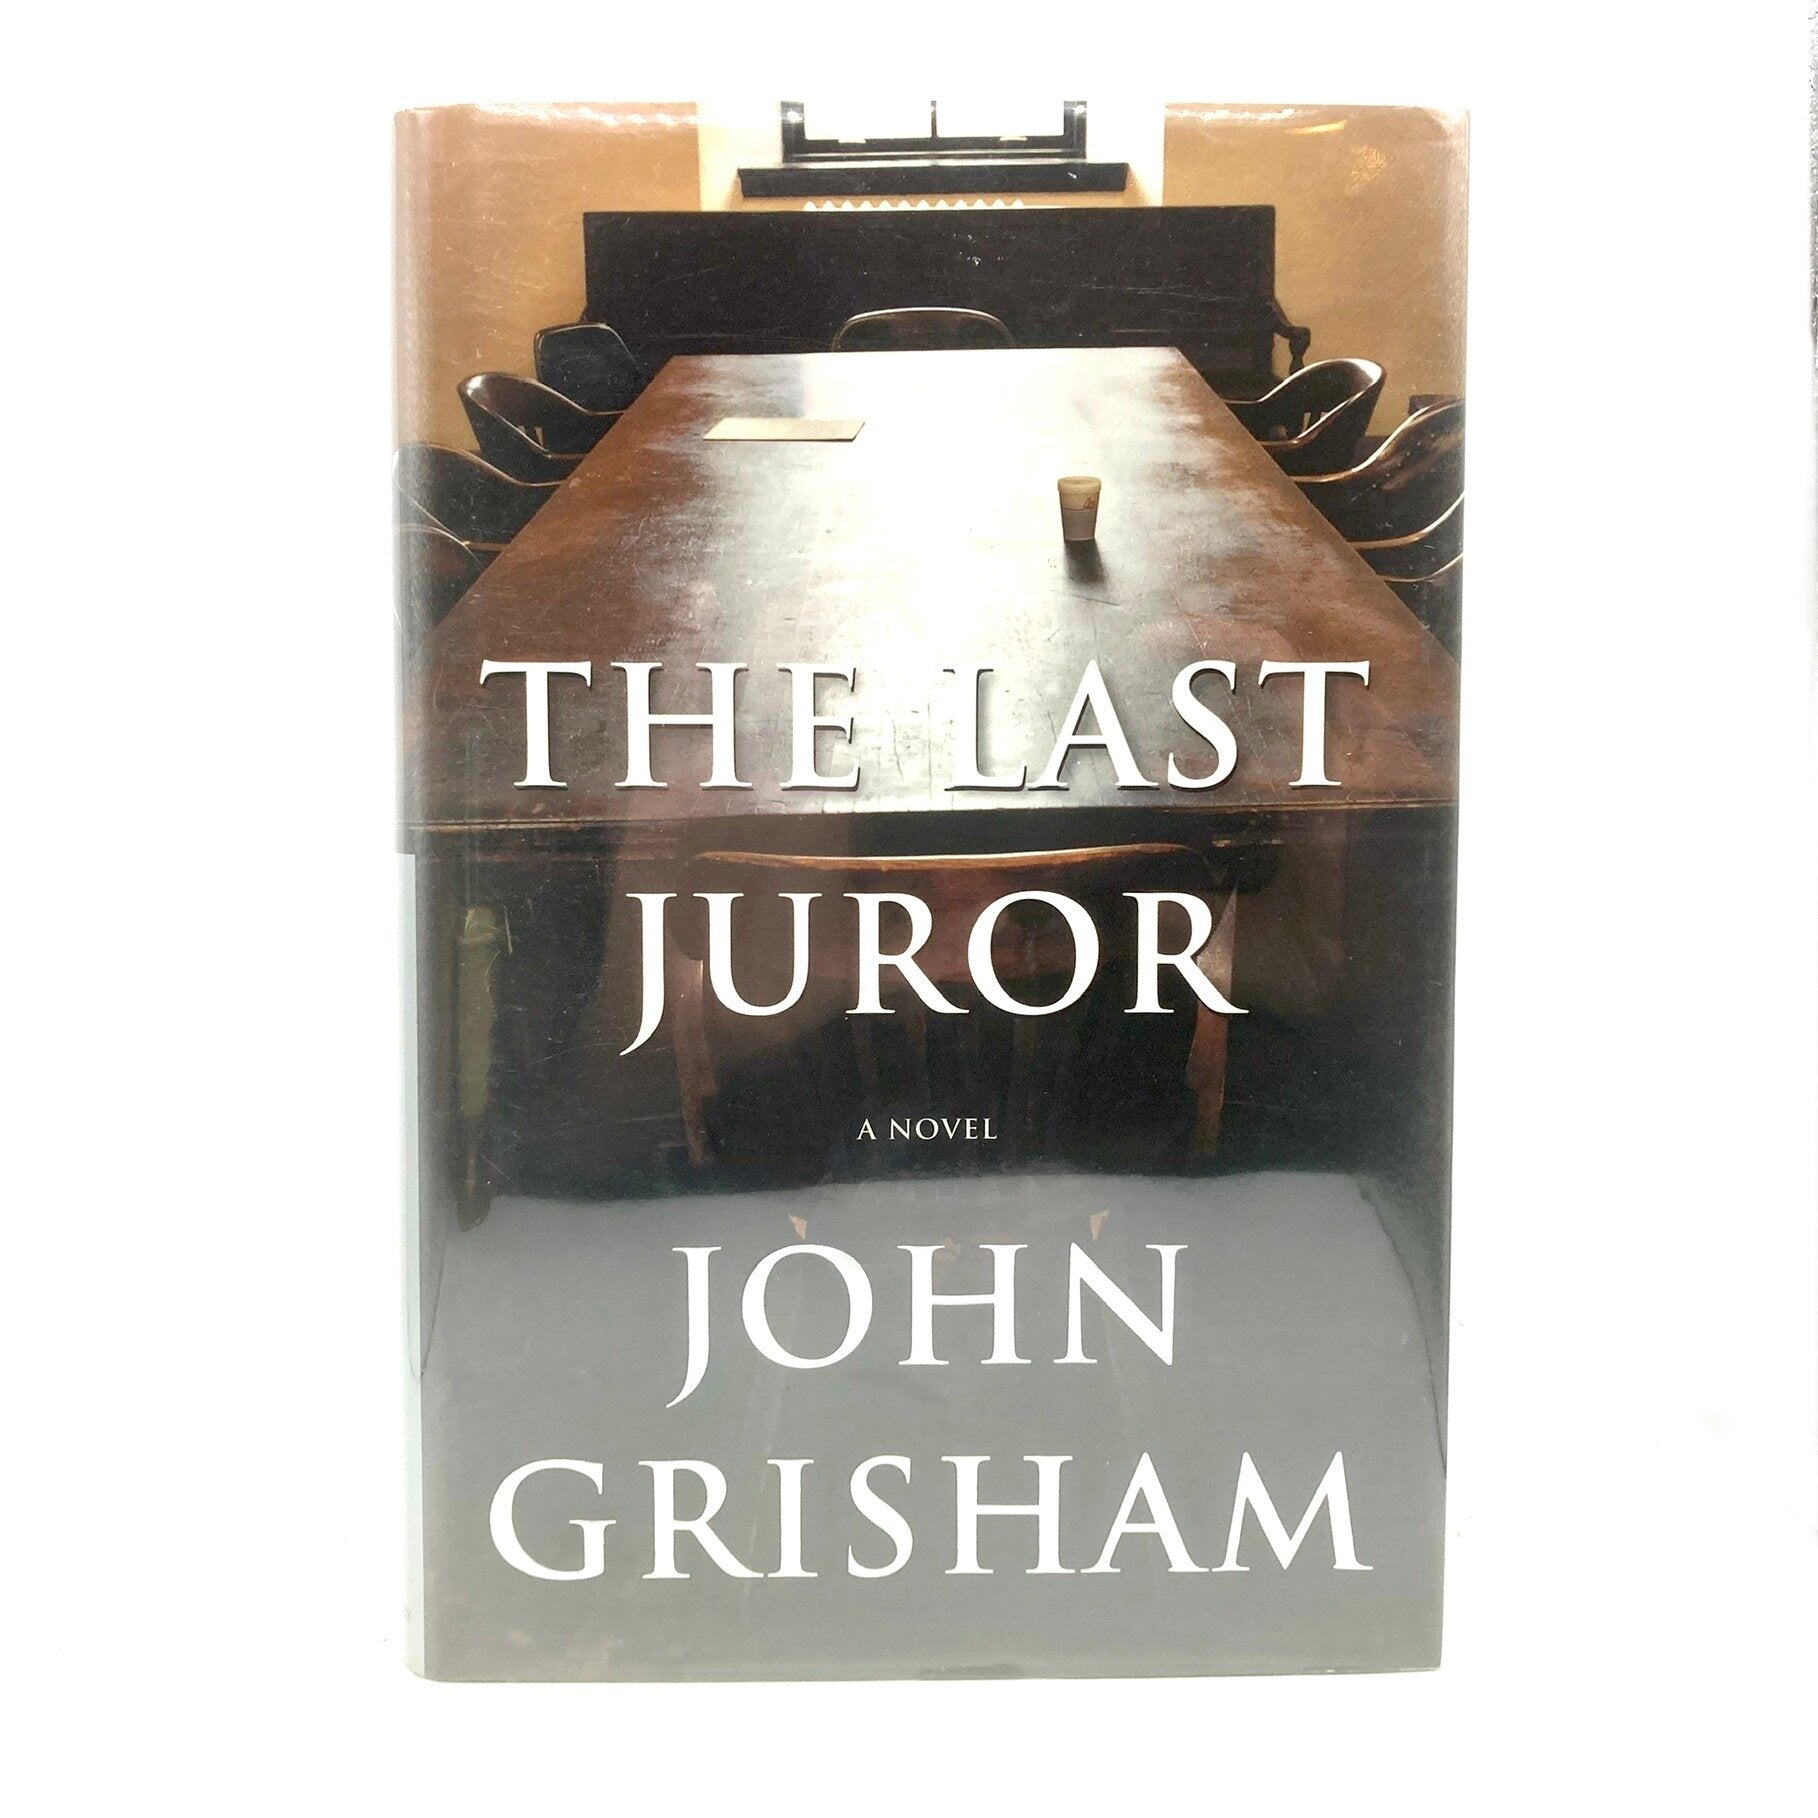 GRISHAM, John "The Last Juror" [Doubleday, 2004] 1st Edition (Signed) - Buzz Bookstore